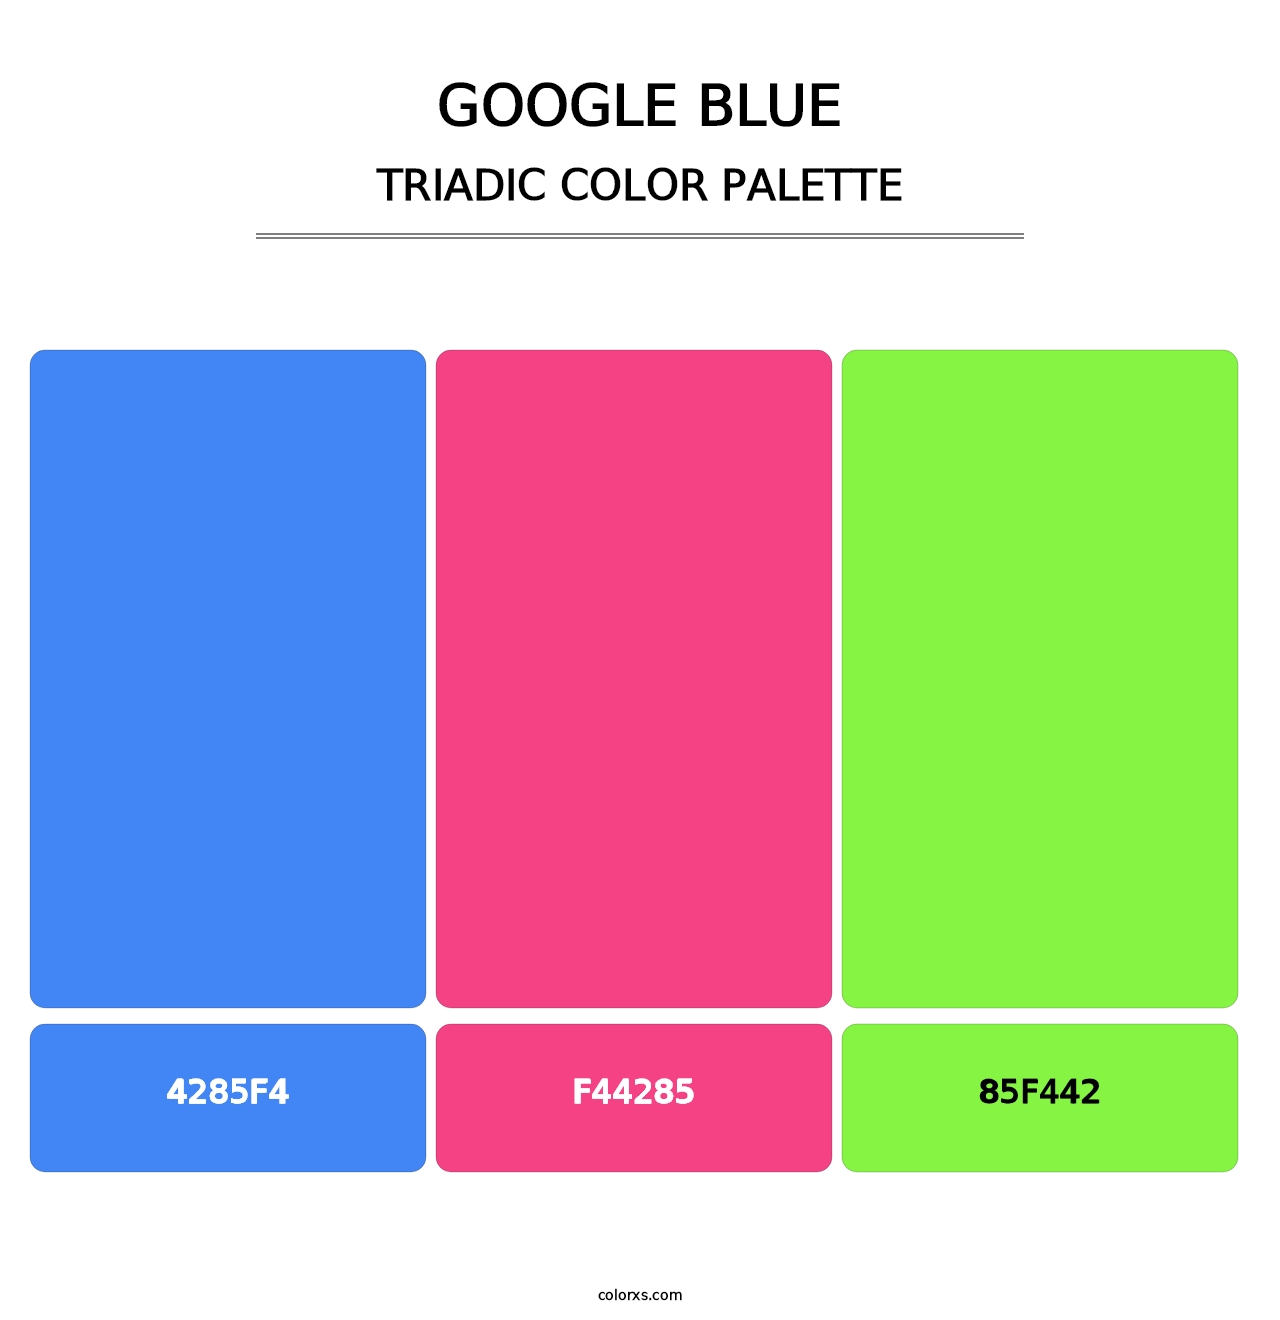 Google Blue - Triadic Color Palette